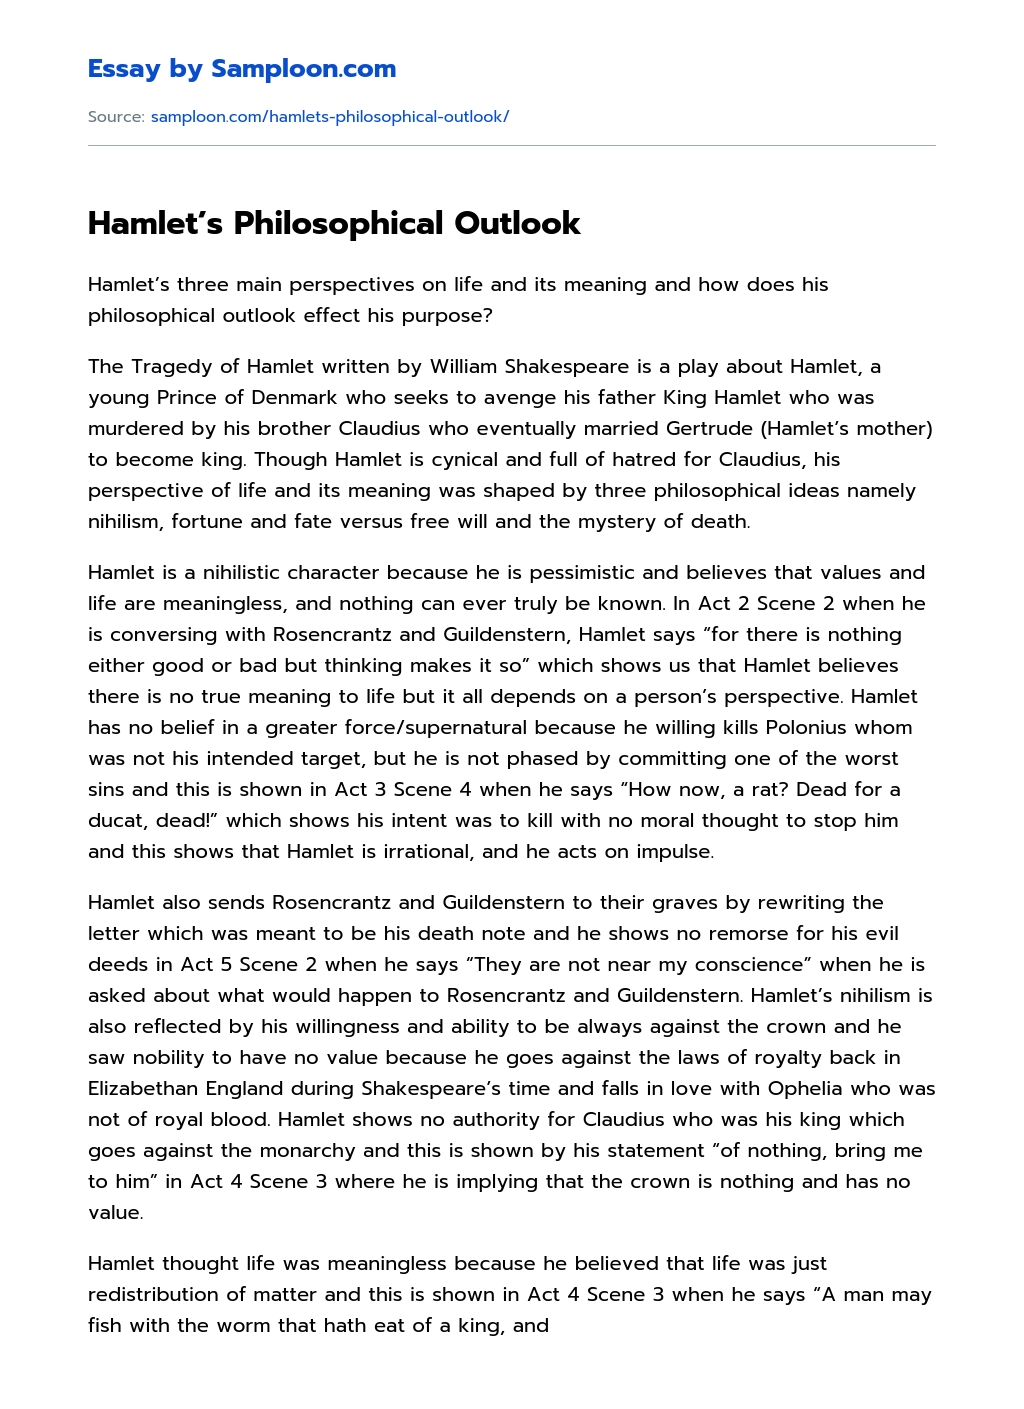 Hamlet’s Philosophical Outlook essay